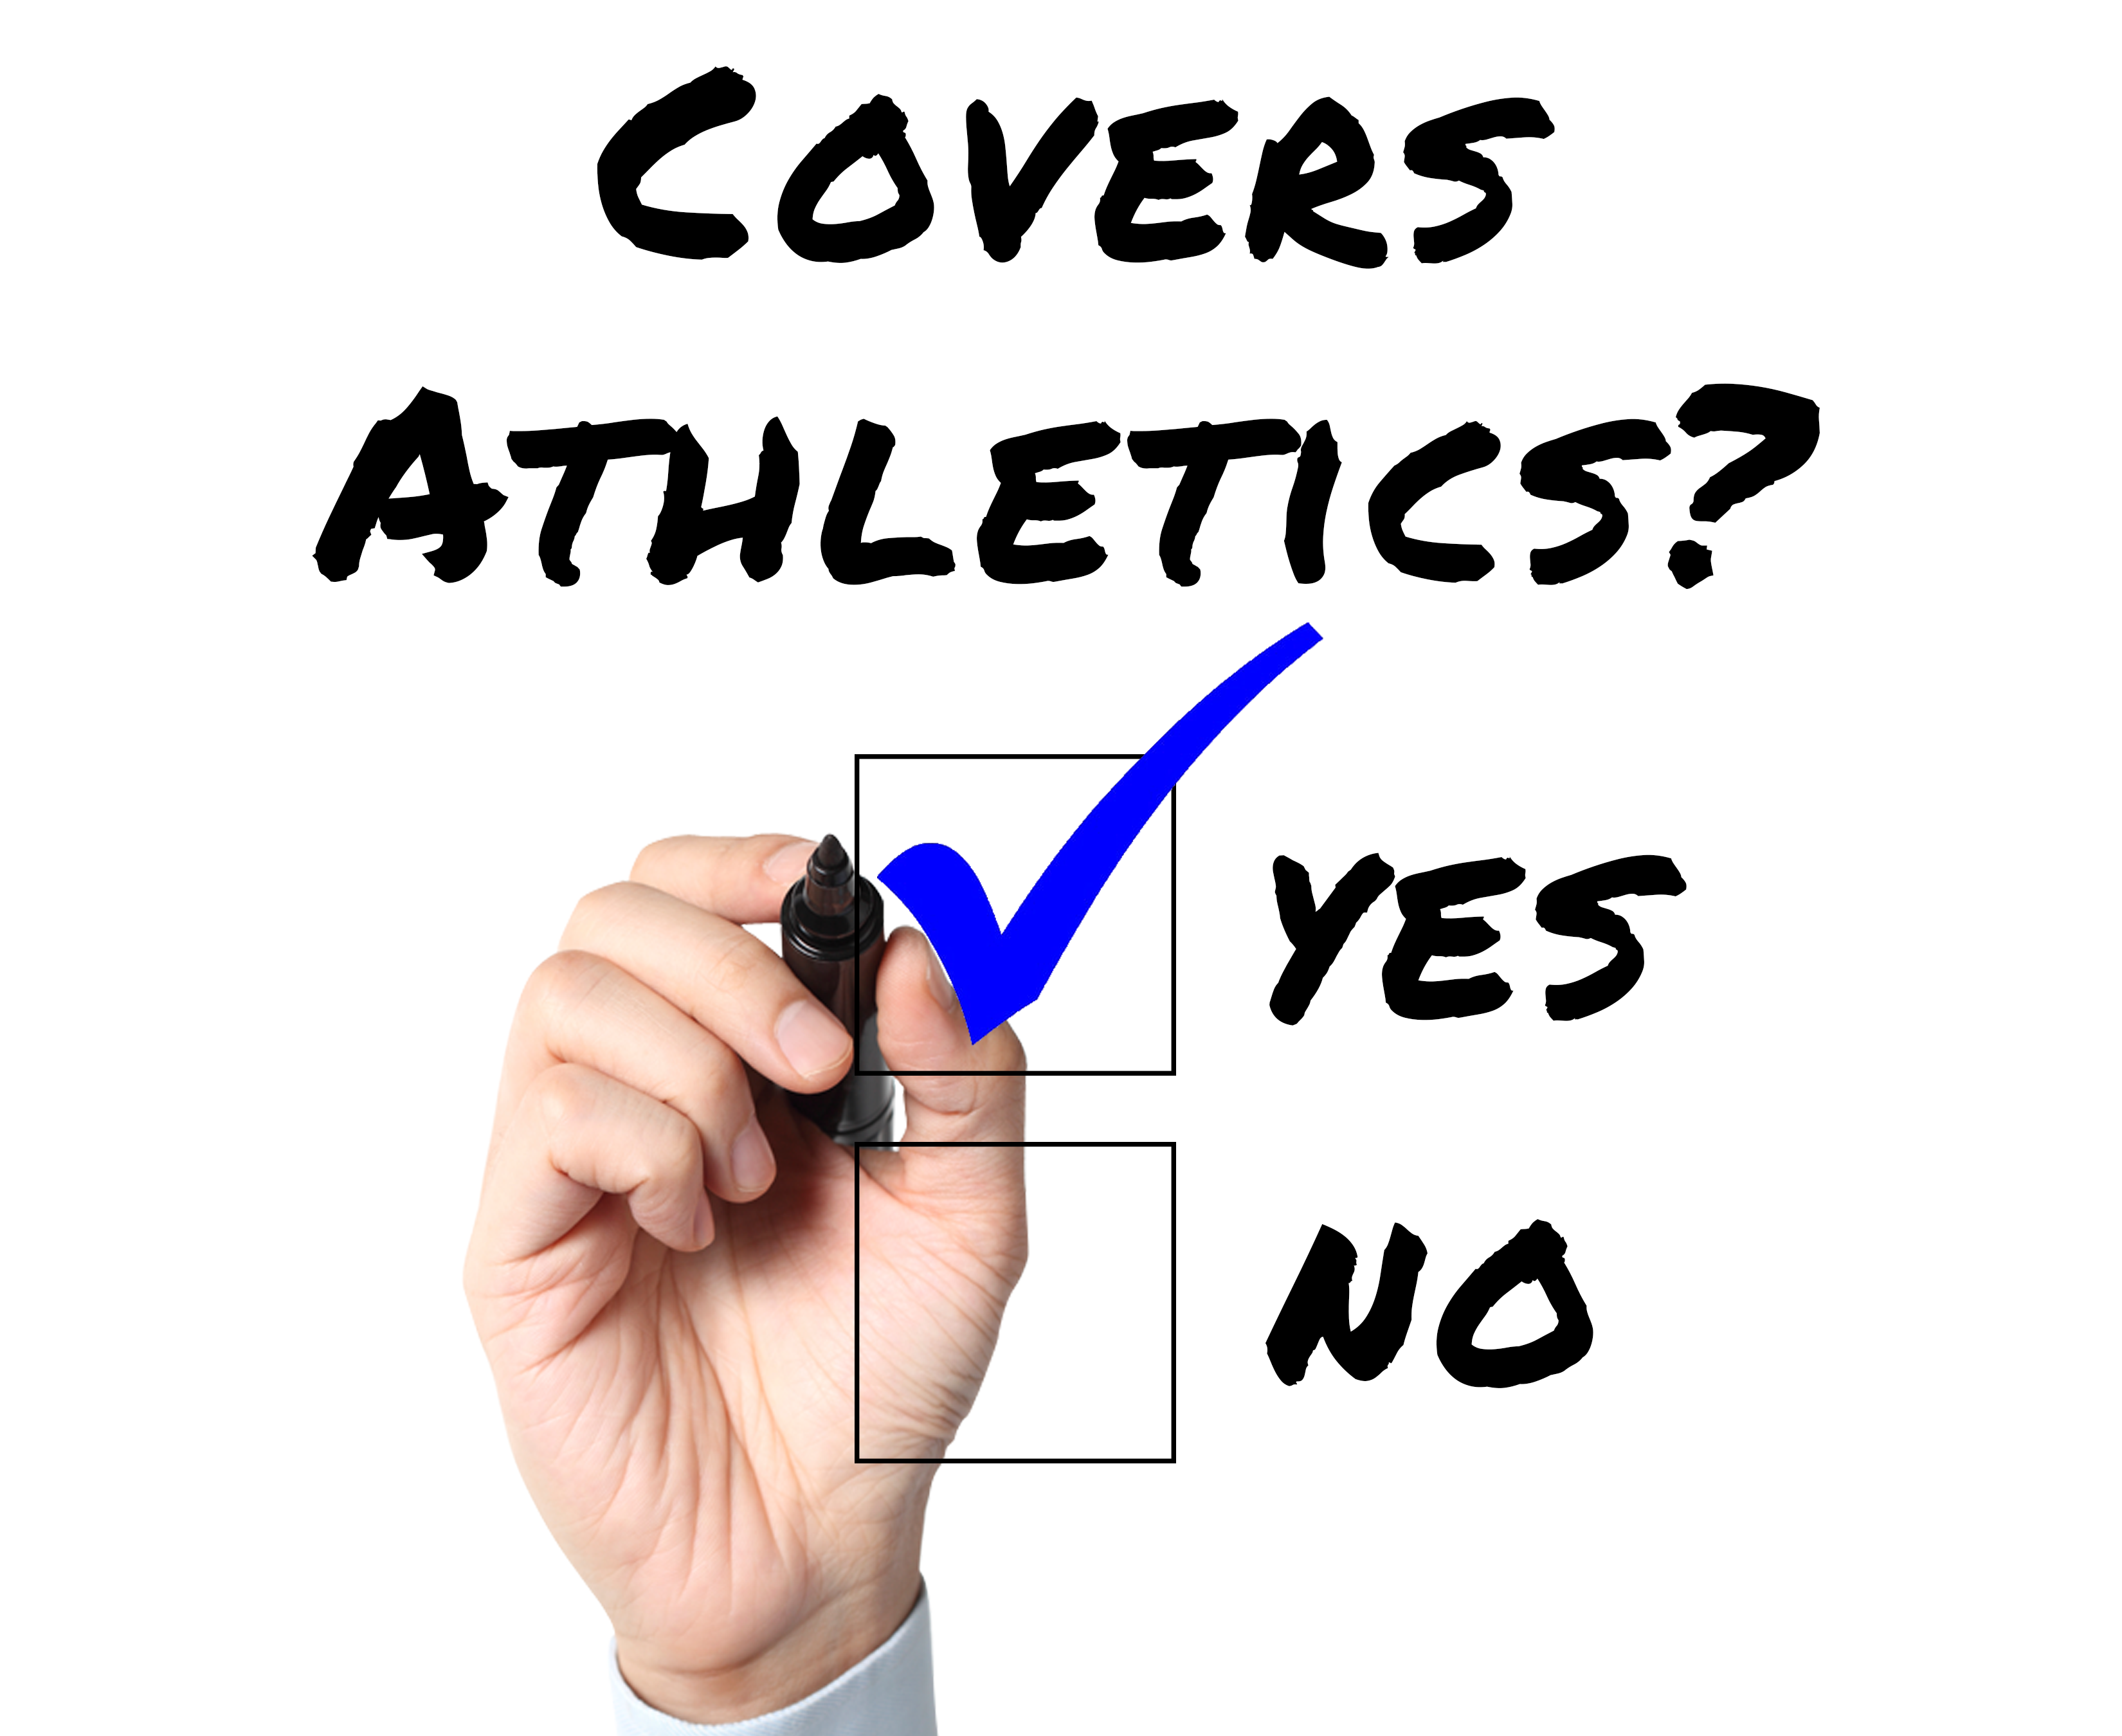 Covered Athletics